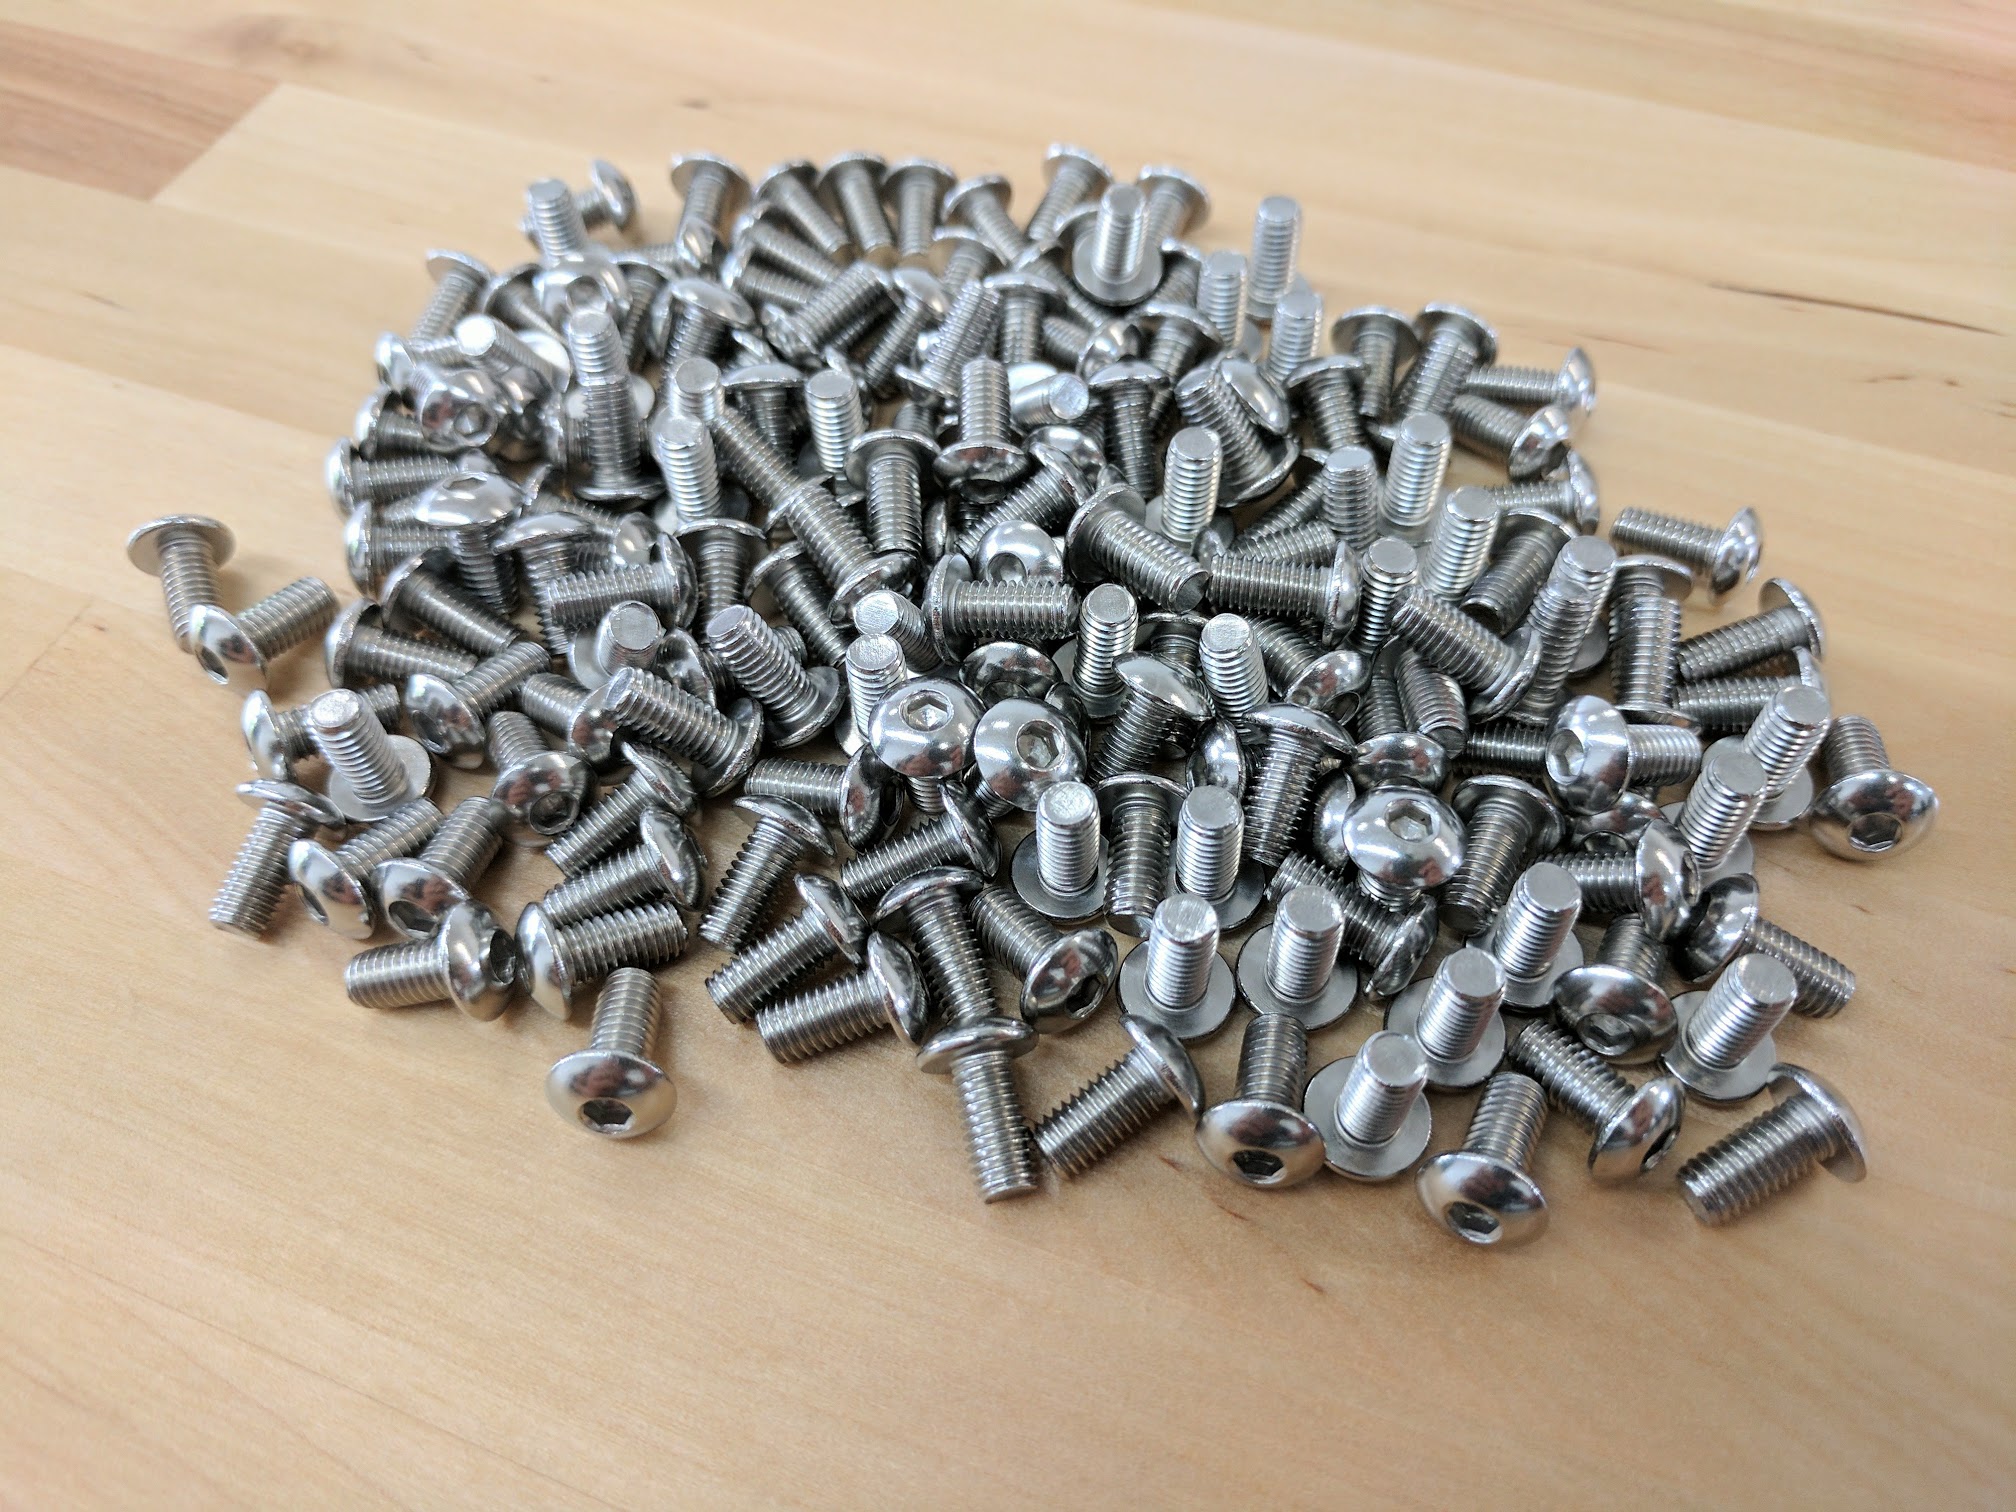 M5x10 screws